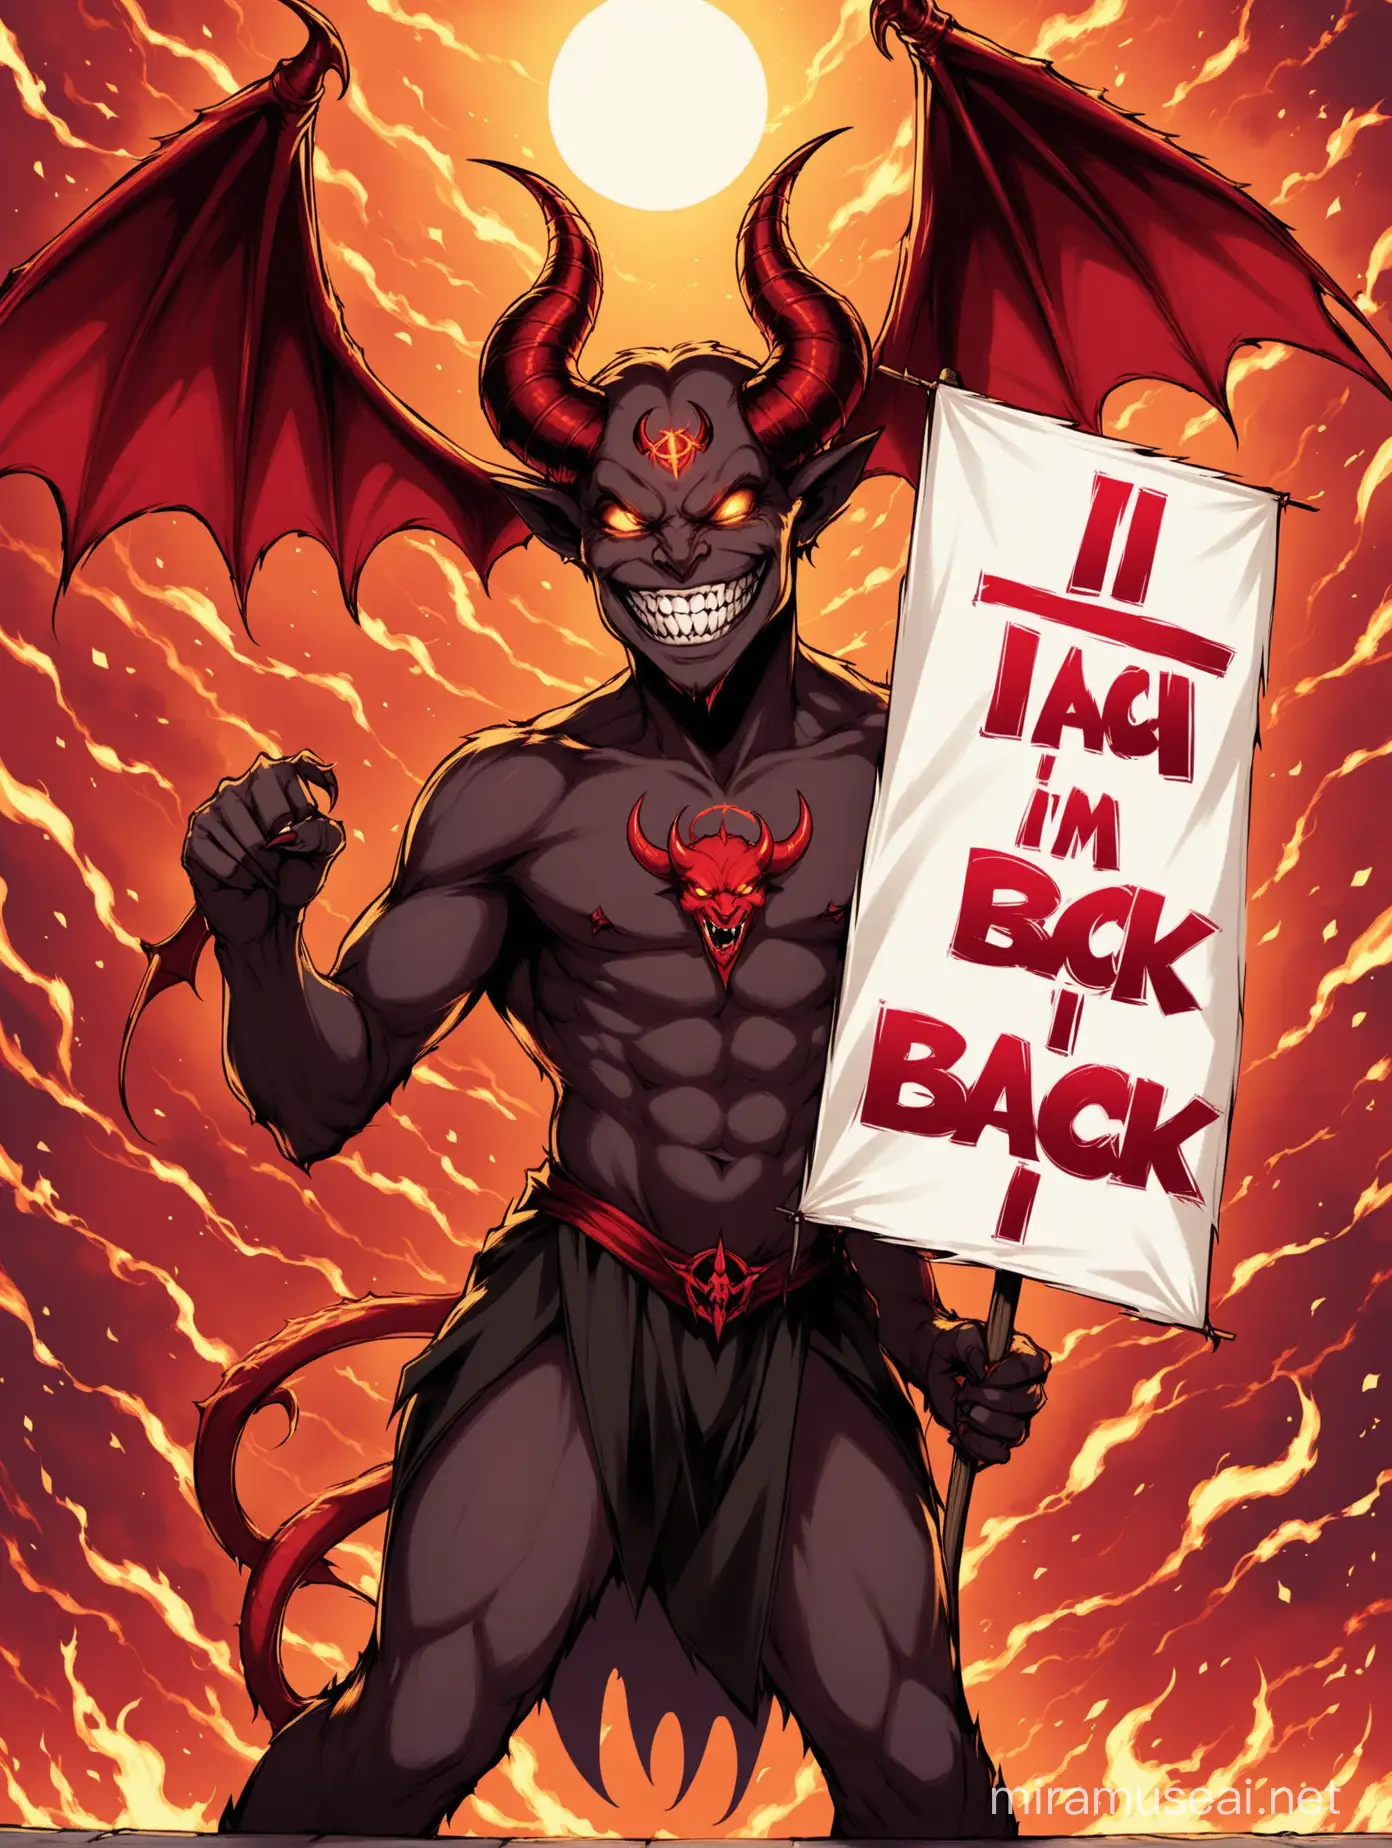 Satan smiling holding banner "I'm back" 